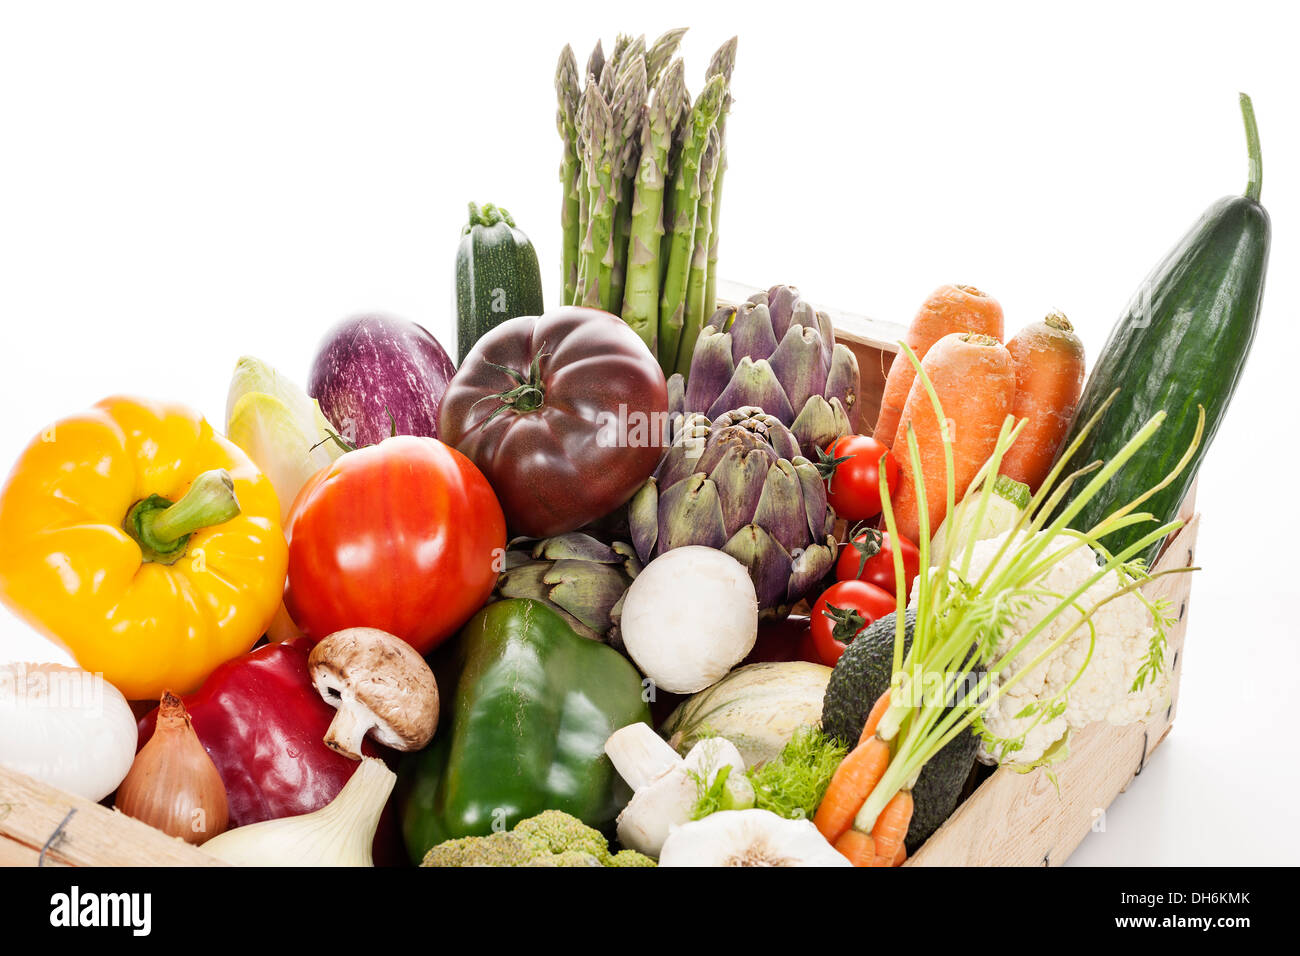 Embalaje de materias vegetales frescos del mercado de granjeros Foto de stock